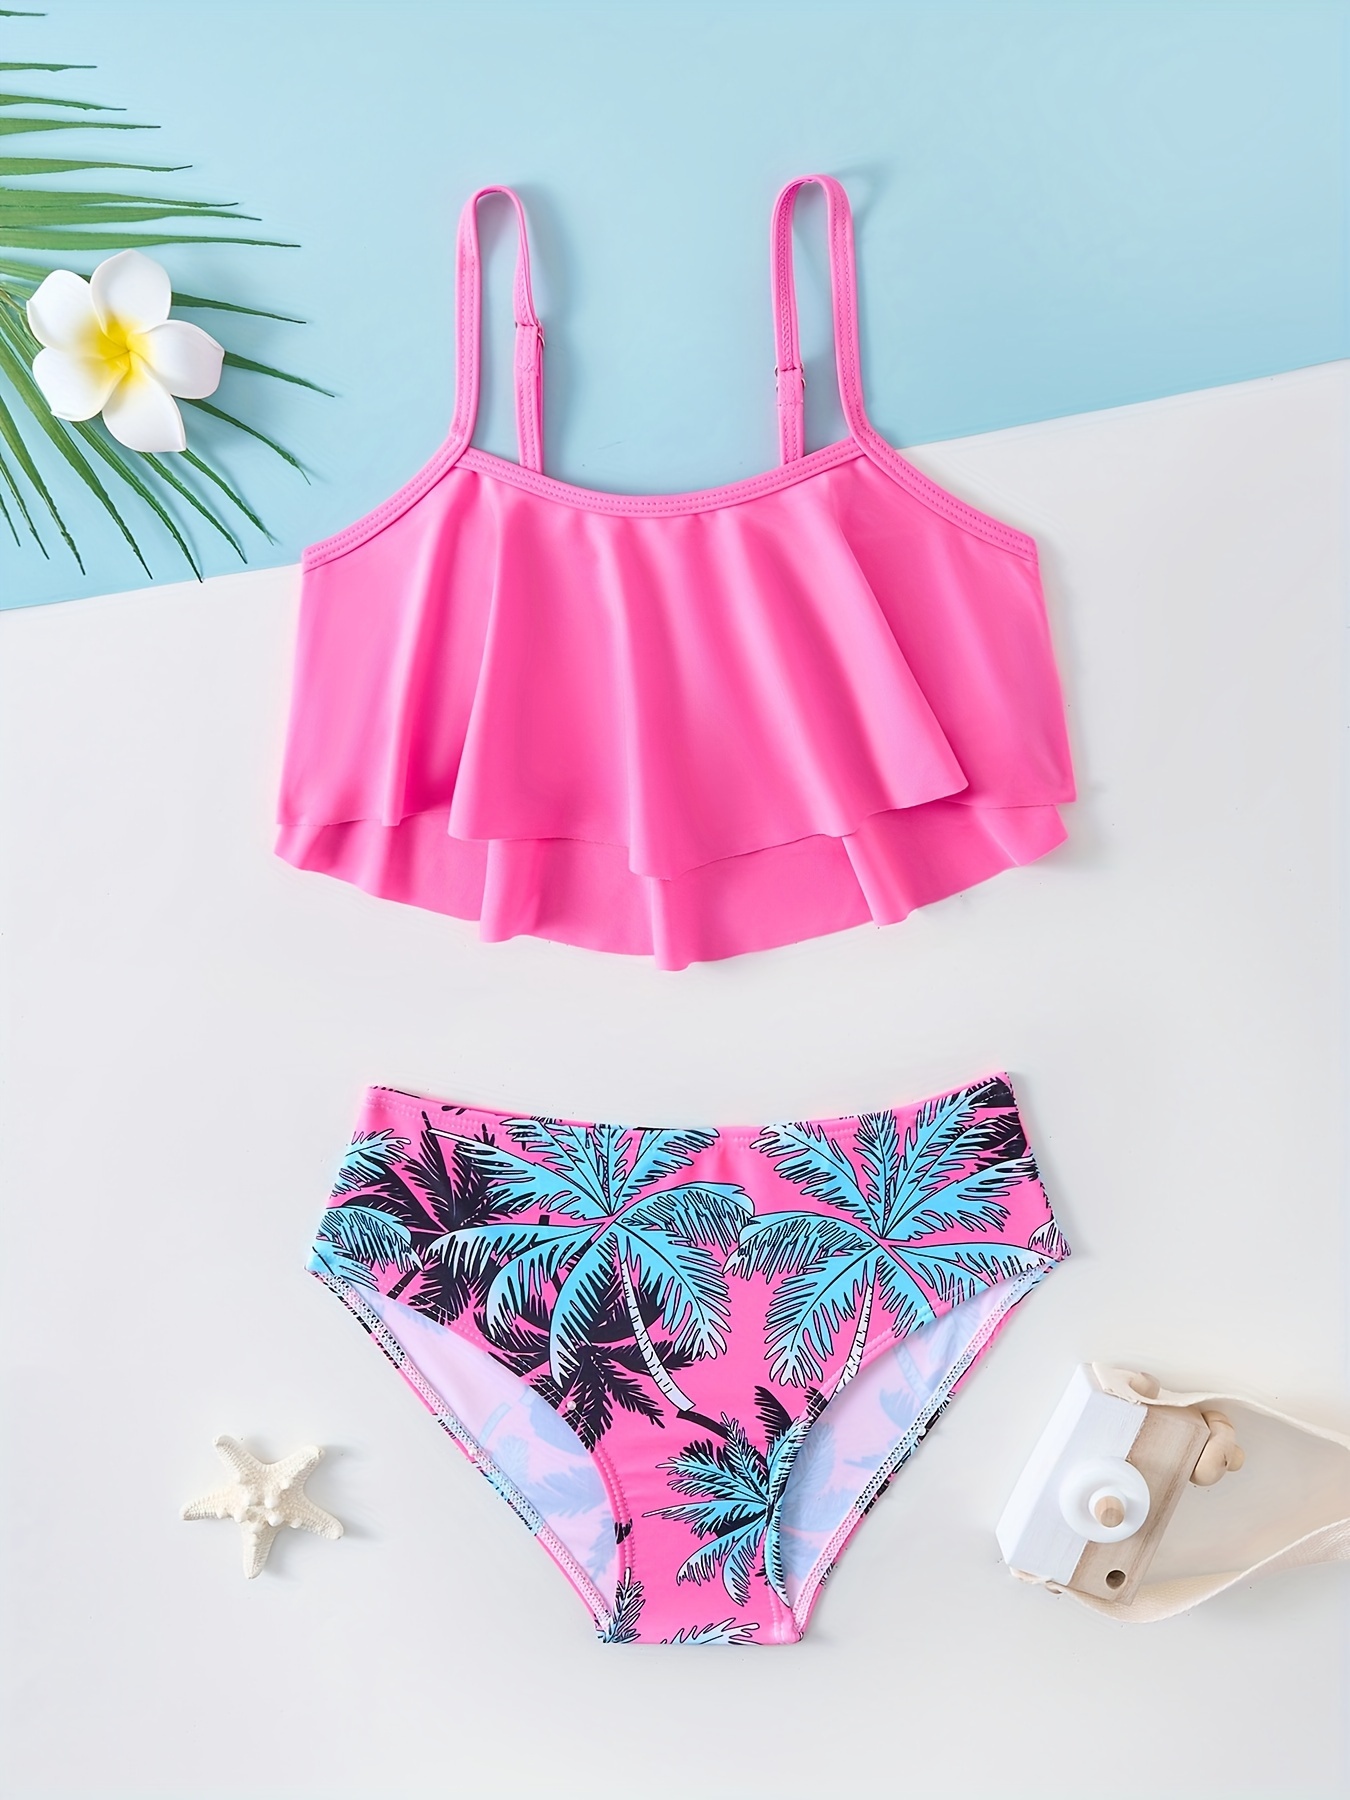 2DXuixsh Bathing Suits for Girls Size 10-12 Toddler Baby Girl's 3 Piece  Swimsuits Sunflowers Prints Bikini Bathing Suit Briefs Girls Bikini Beach